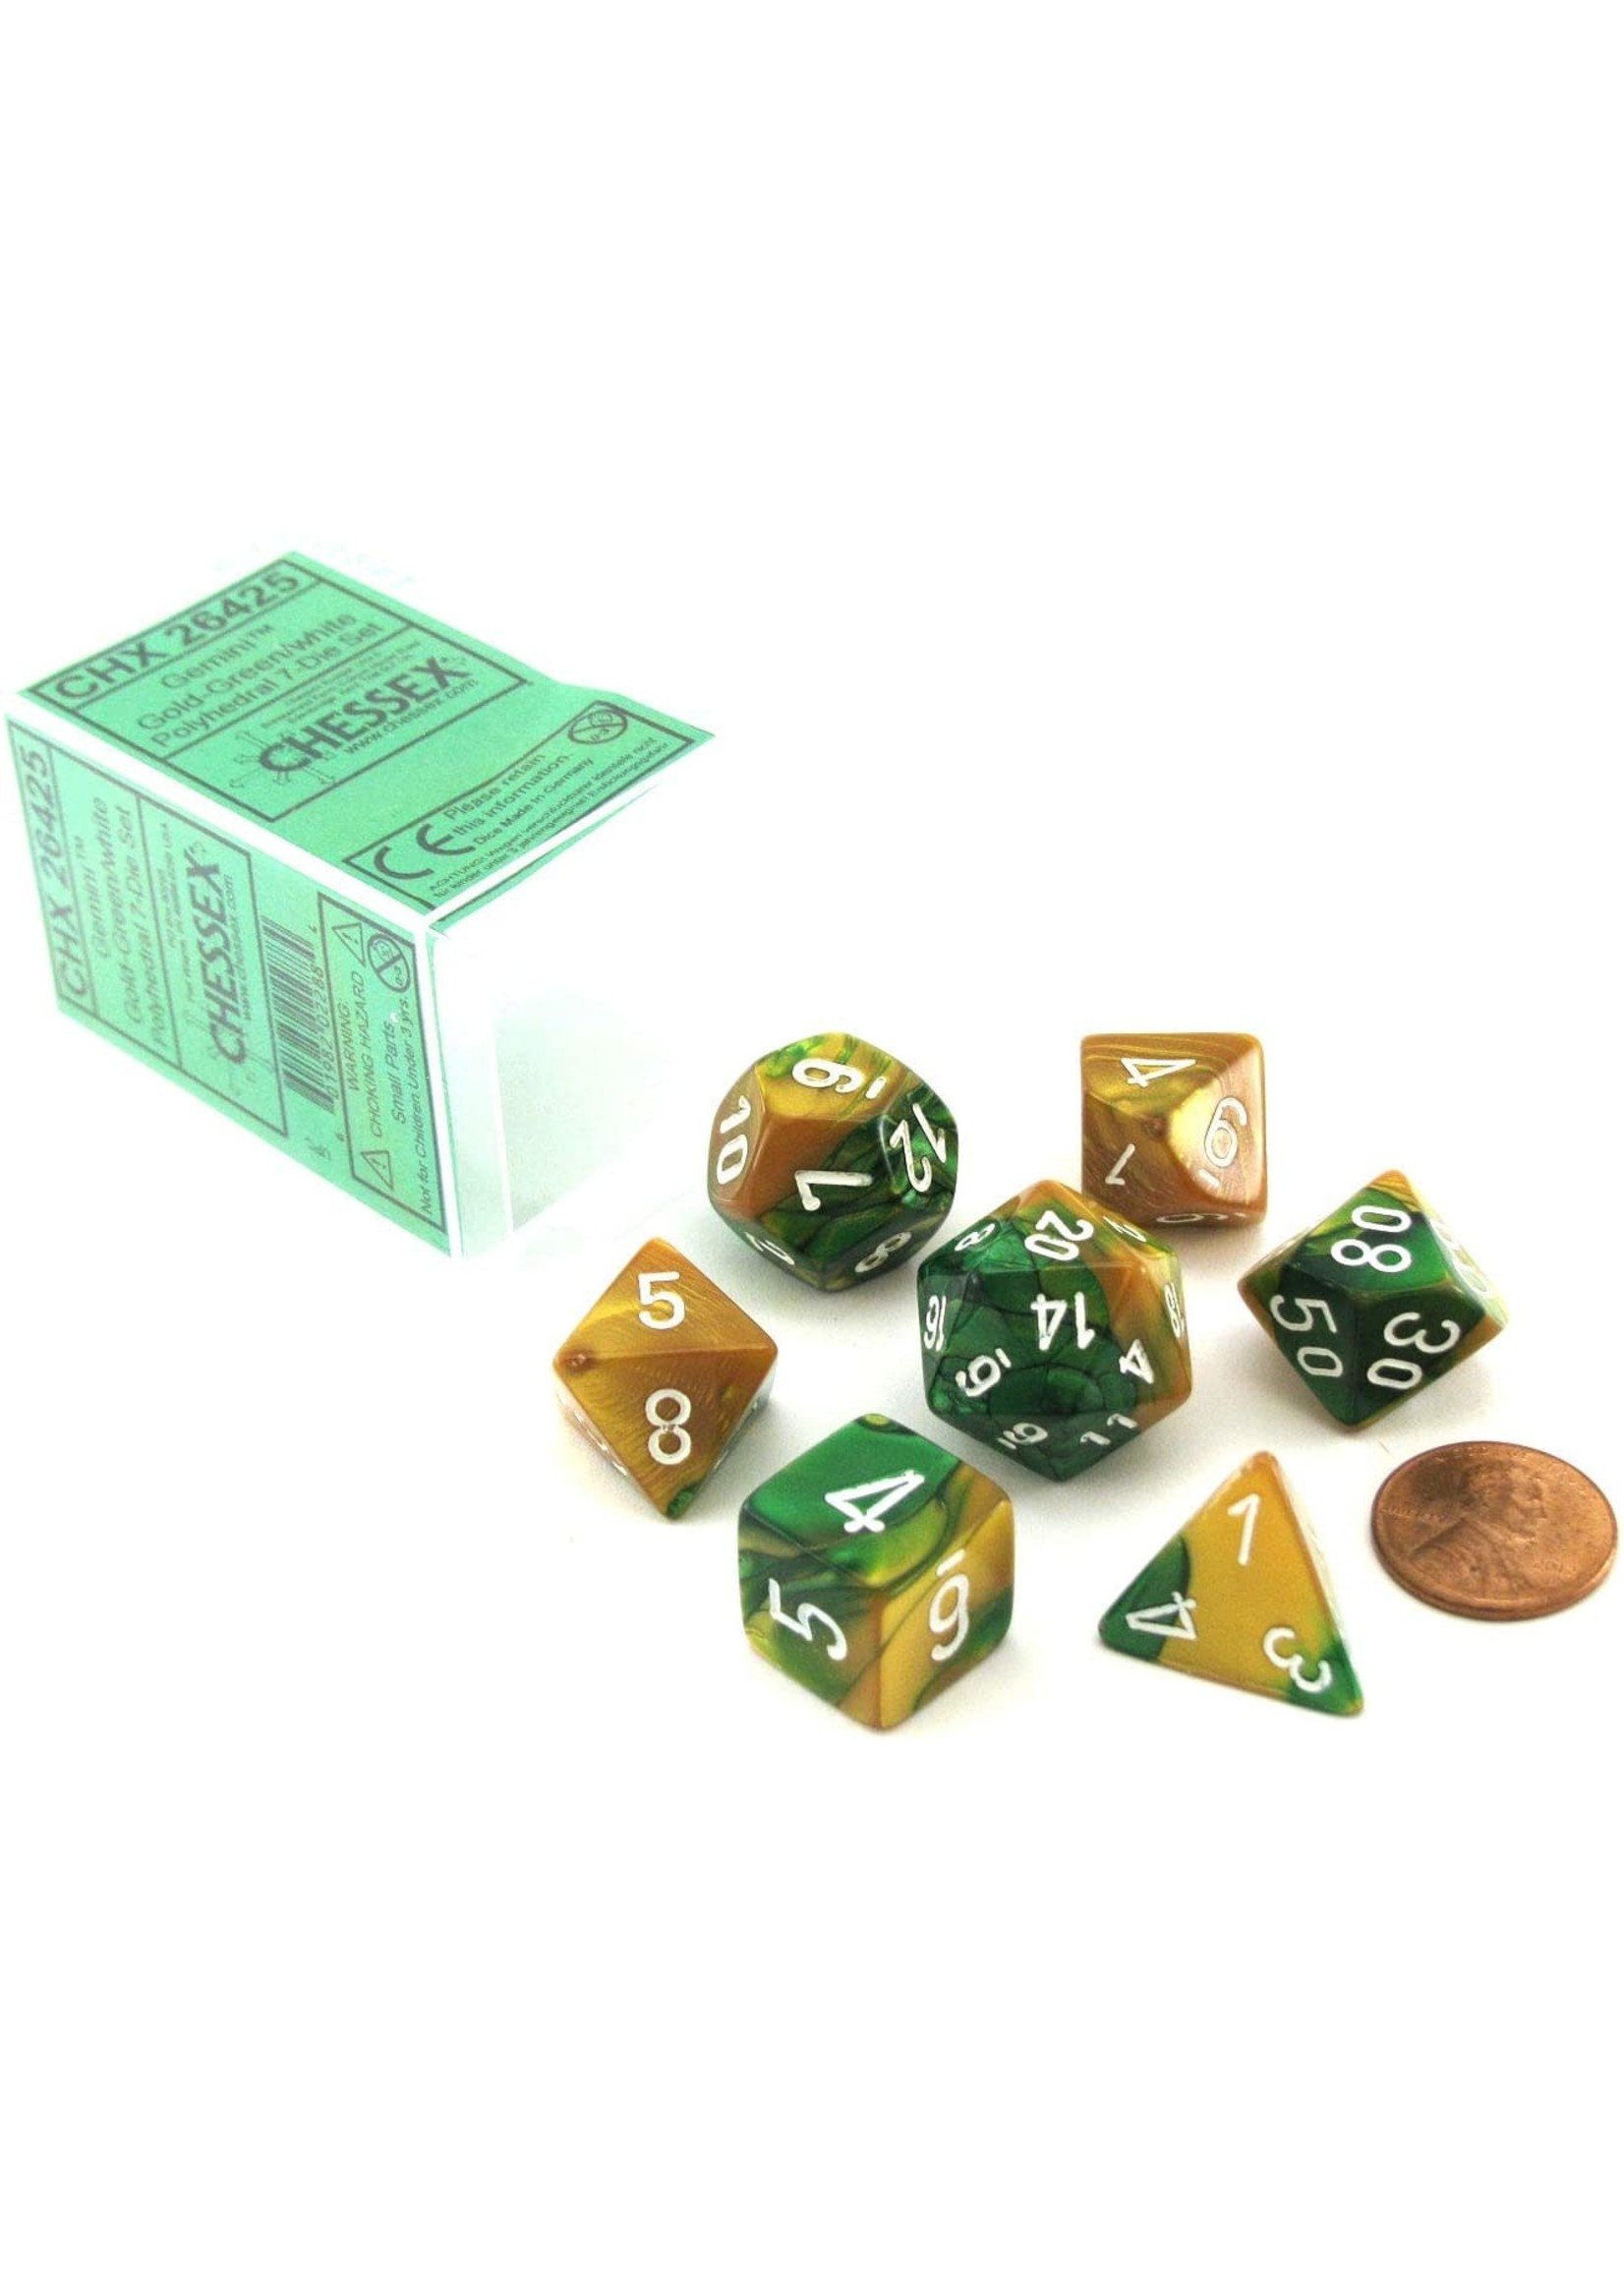 Chessex Gemini Poly 7 set: Gold & Green w/ White